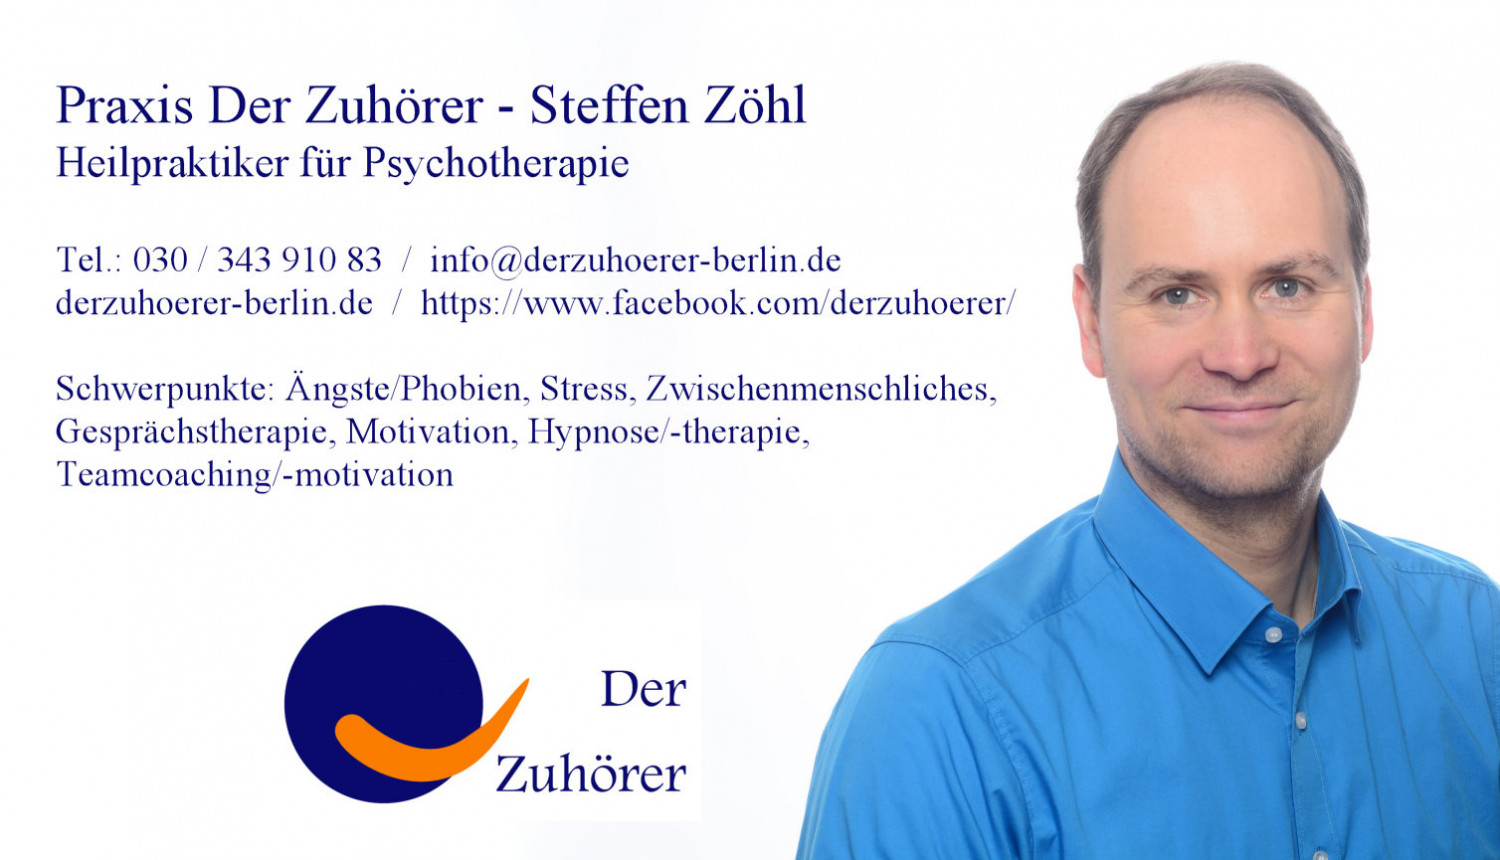 Praxis Der Zuhörer - Steffen Zöhl